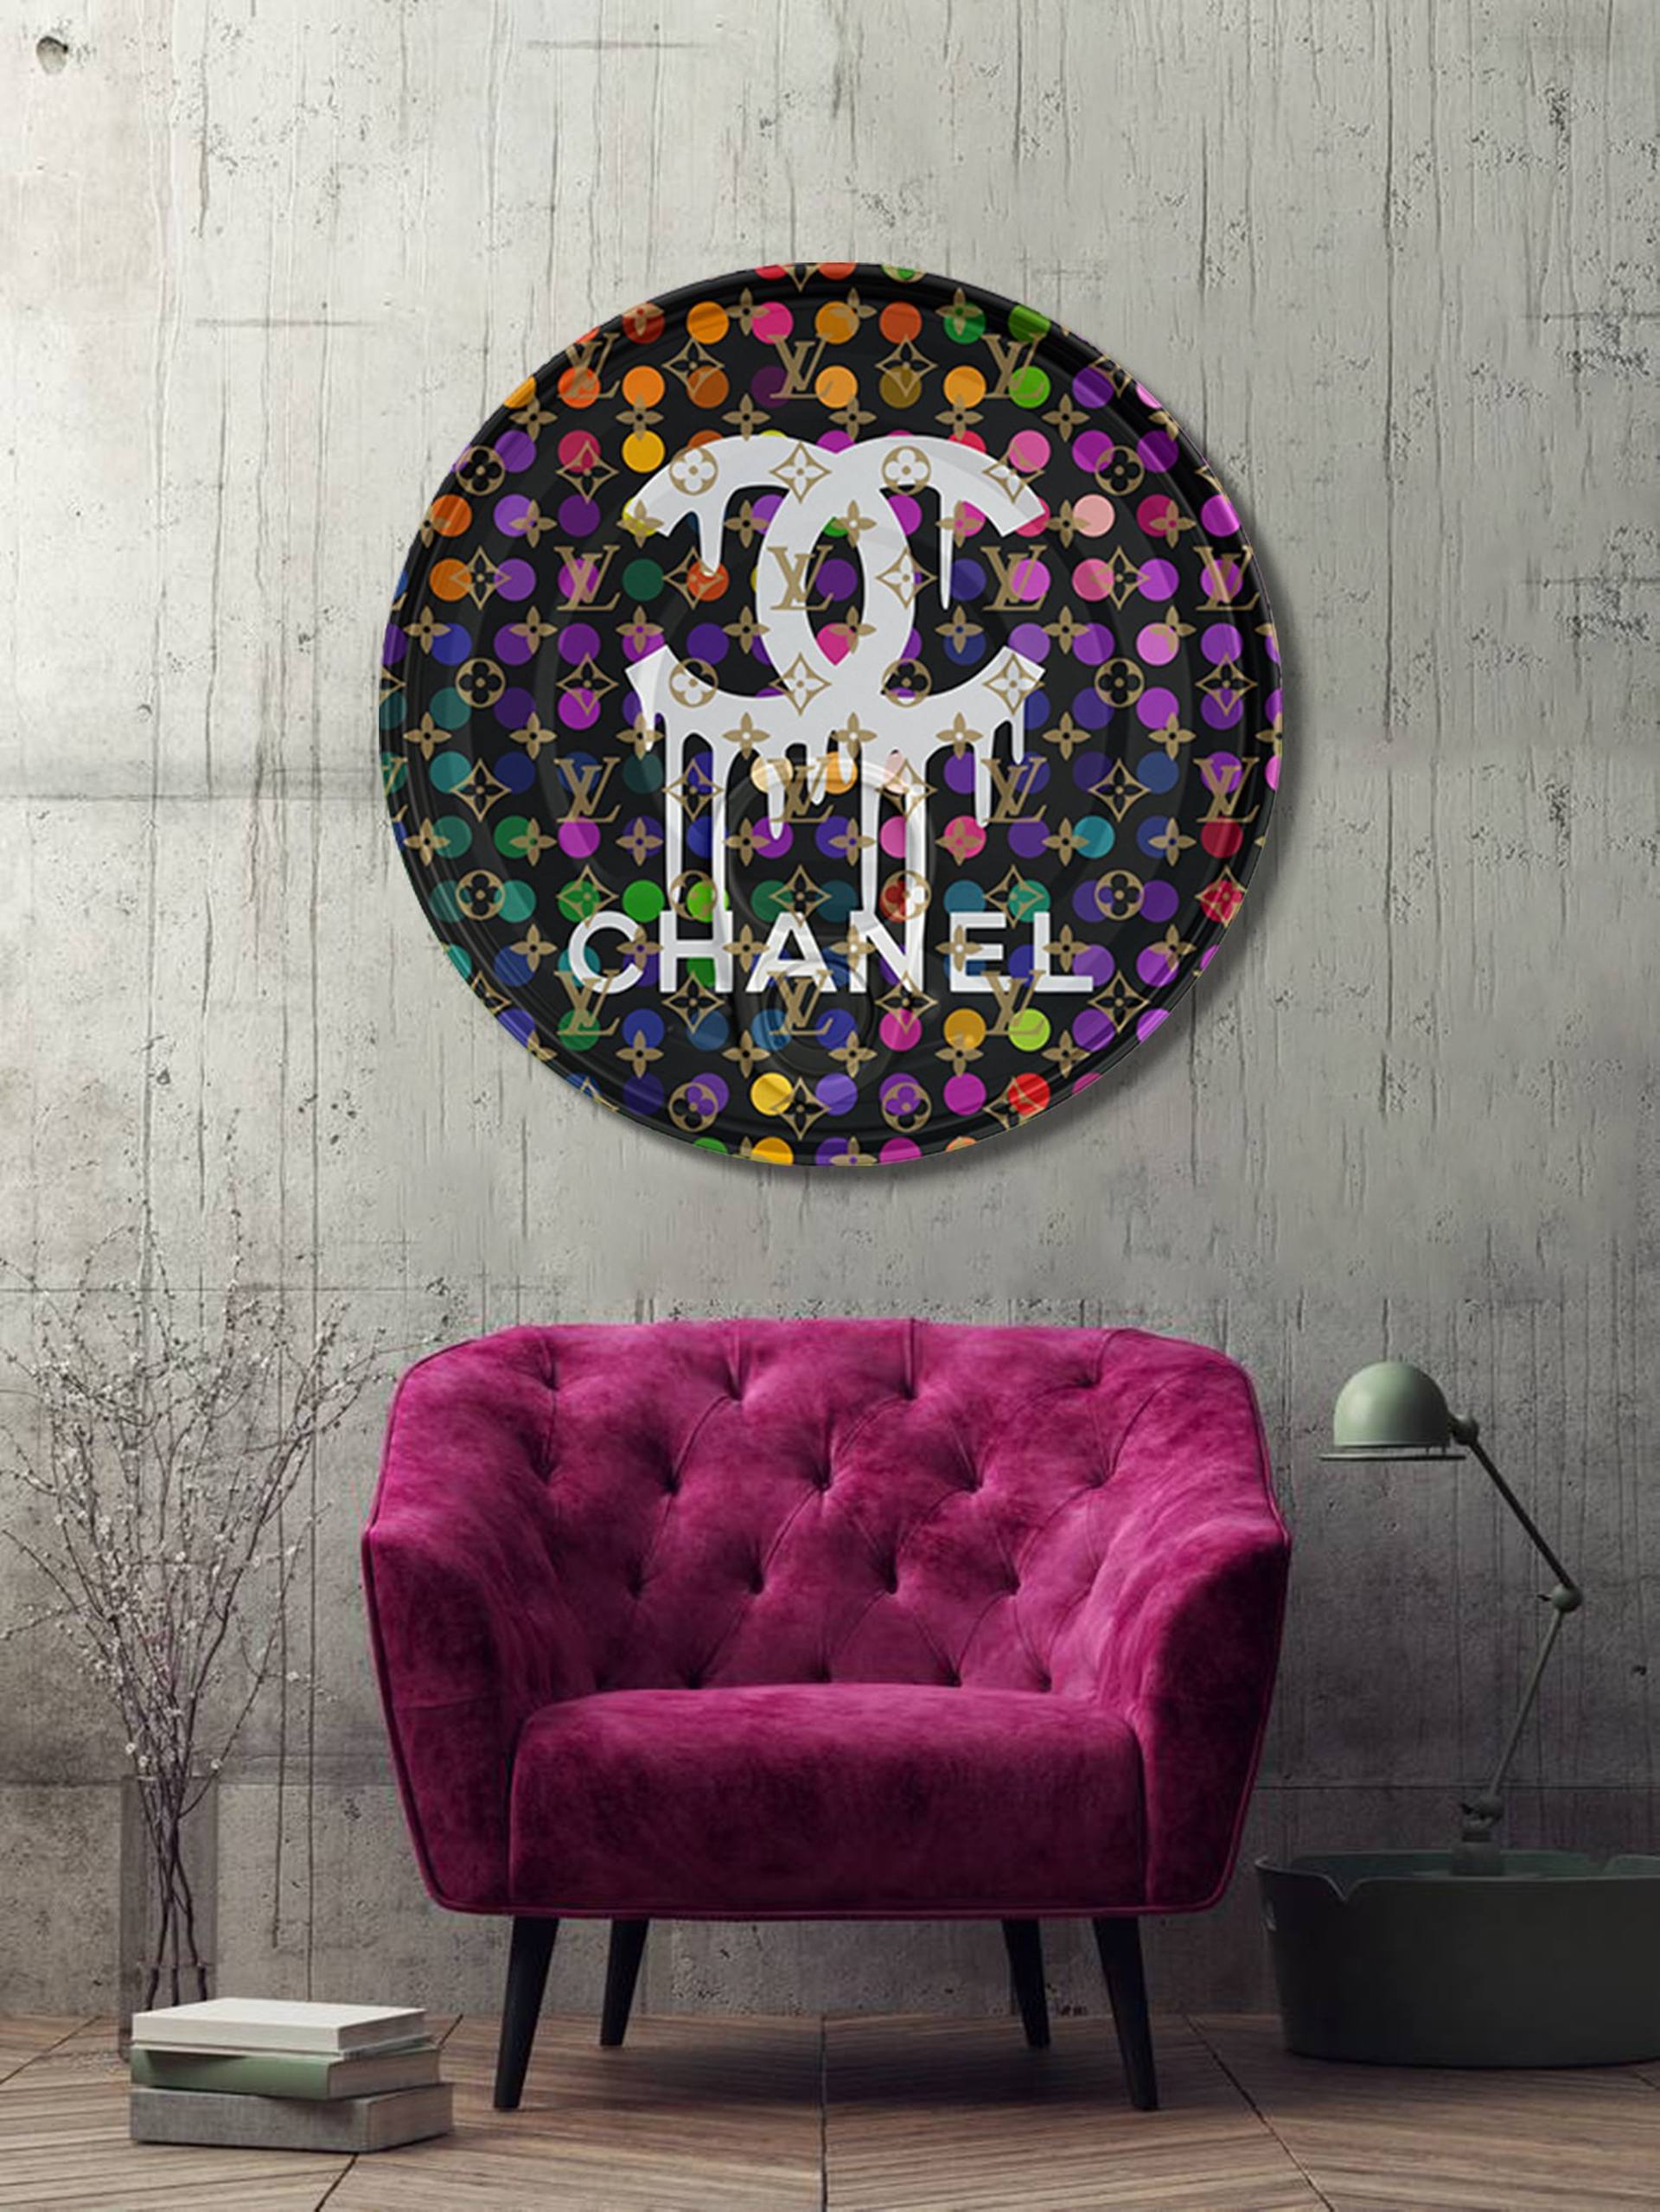 Coco chanel wall art circle Painting